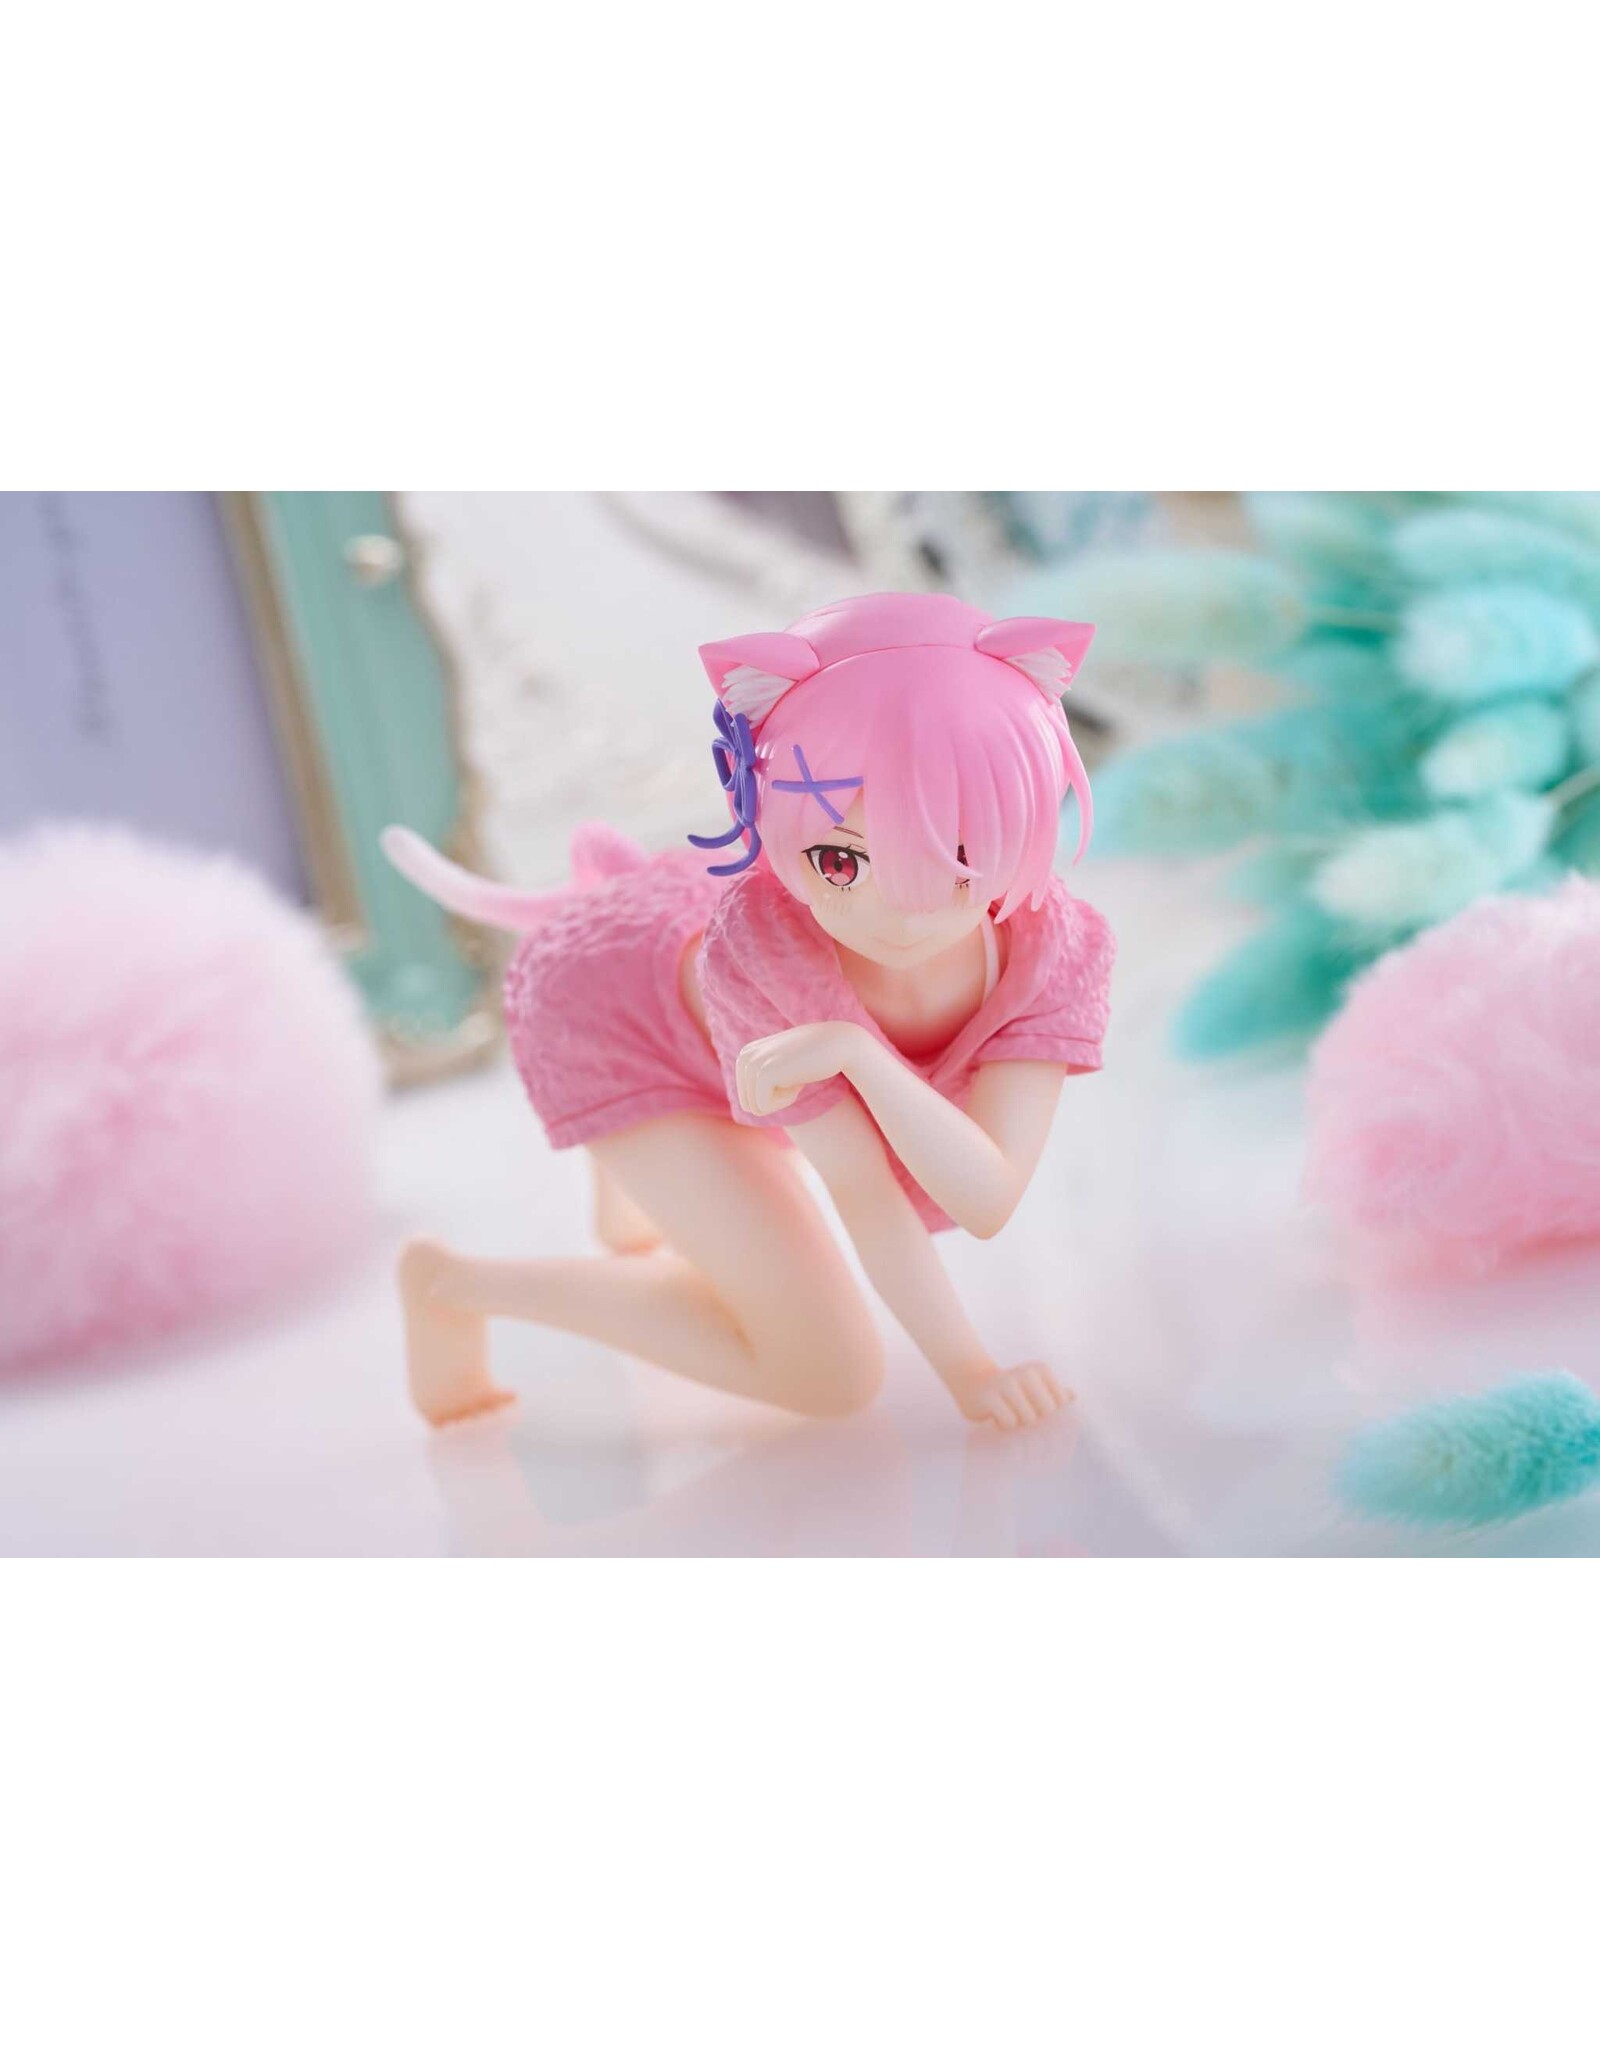 Re:Zero Starting Life in Another World - Desktop Cute Ram (Cat Roomwear Ver.) - PVC Figure - 13 cm